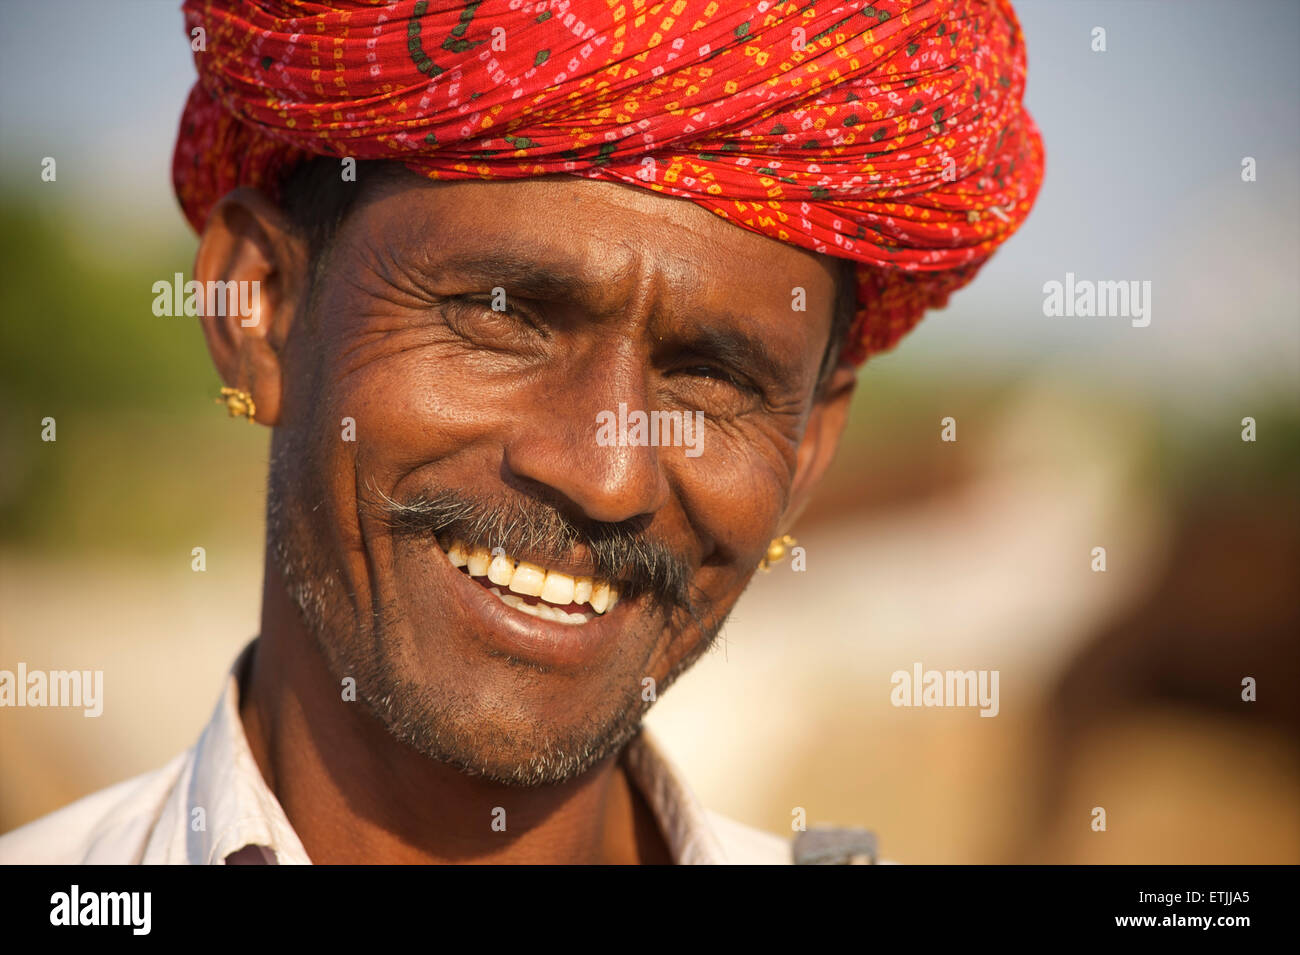 Rajasthani man with colourful turban, Pushkar, Rajasthan, India Stock Photo